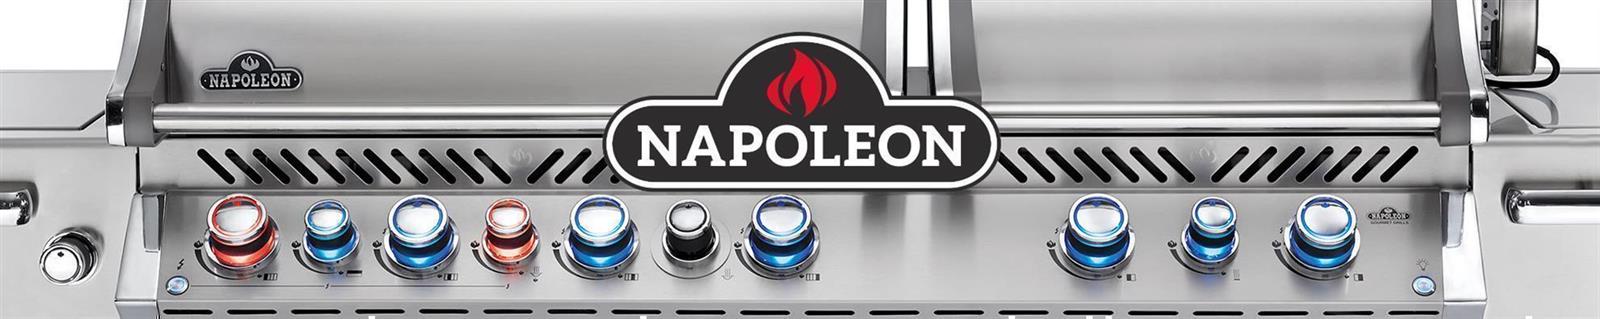 Napoleon - Pizza-Stein für Warmhalteroste